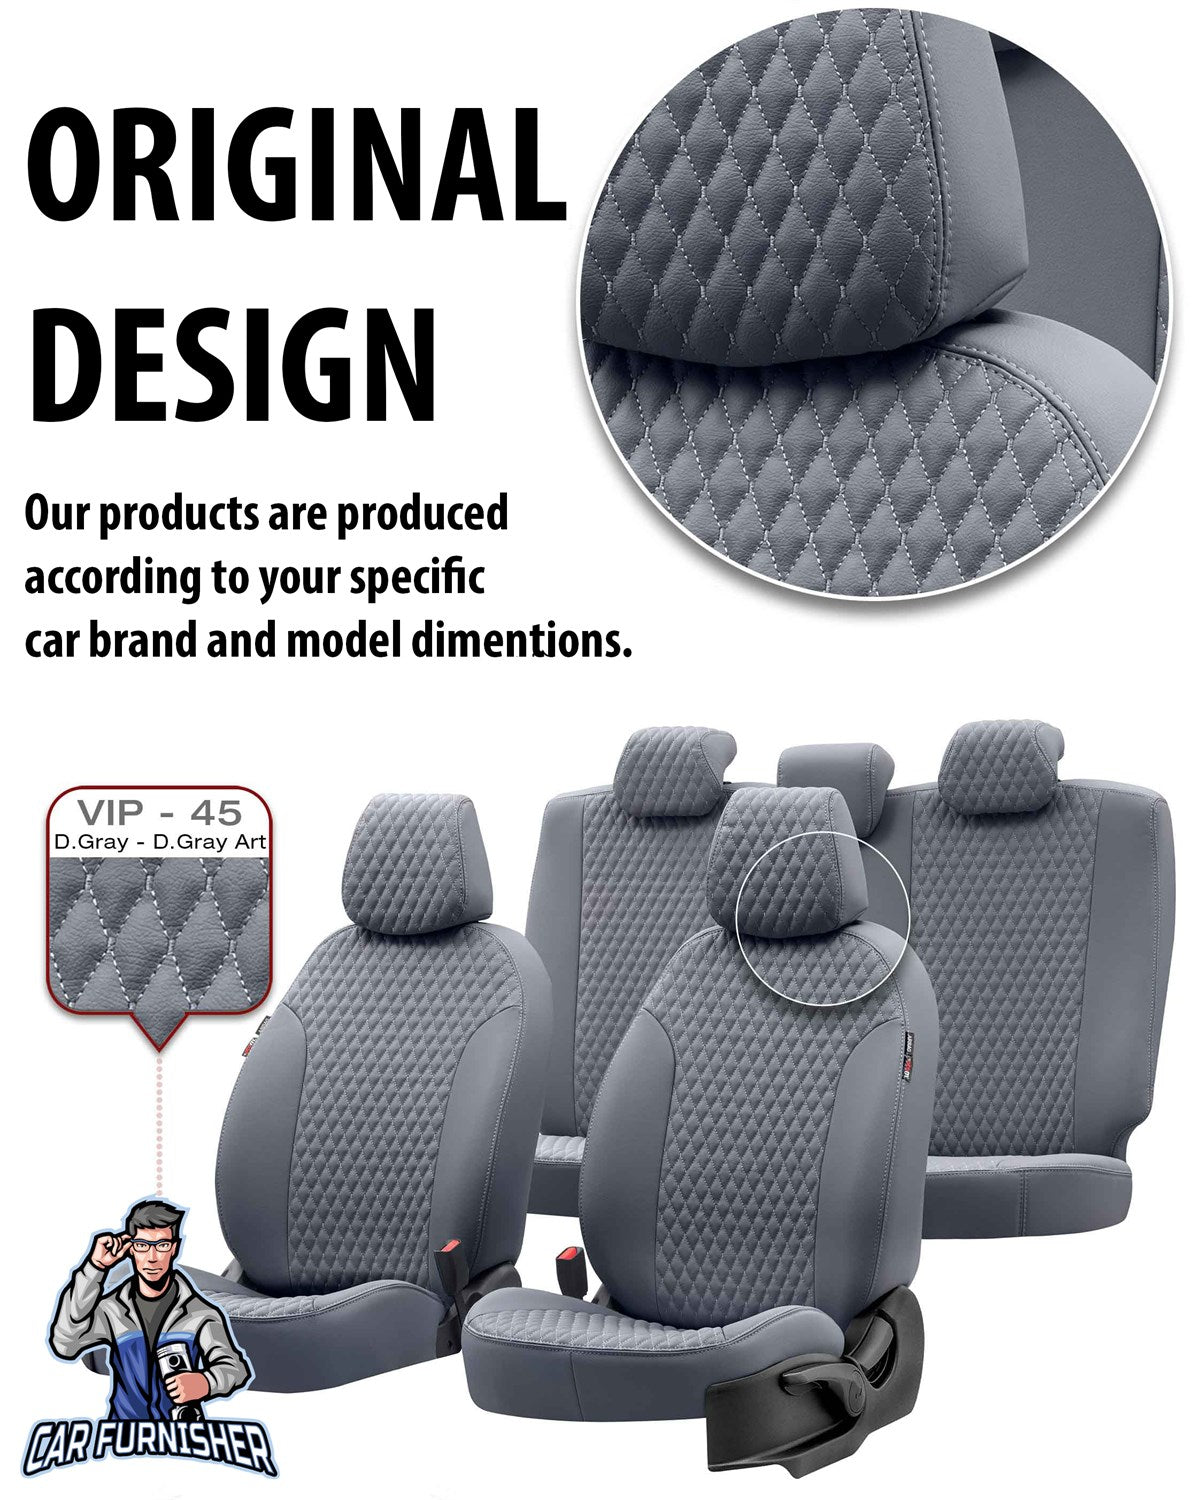 Citroen Berlingo Seat Covers Amsterdam Leather Design Dark Gray Leather